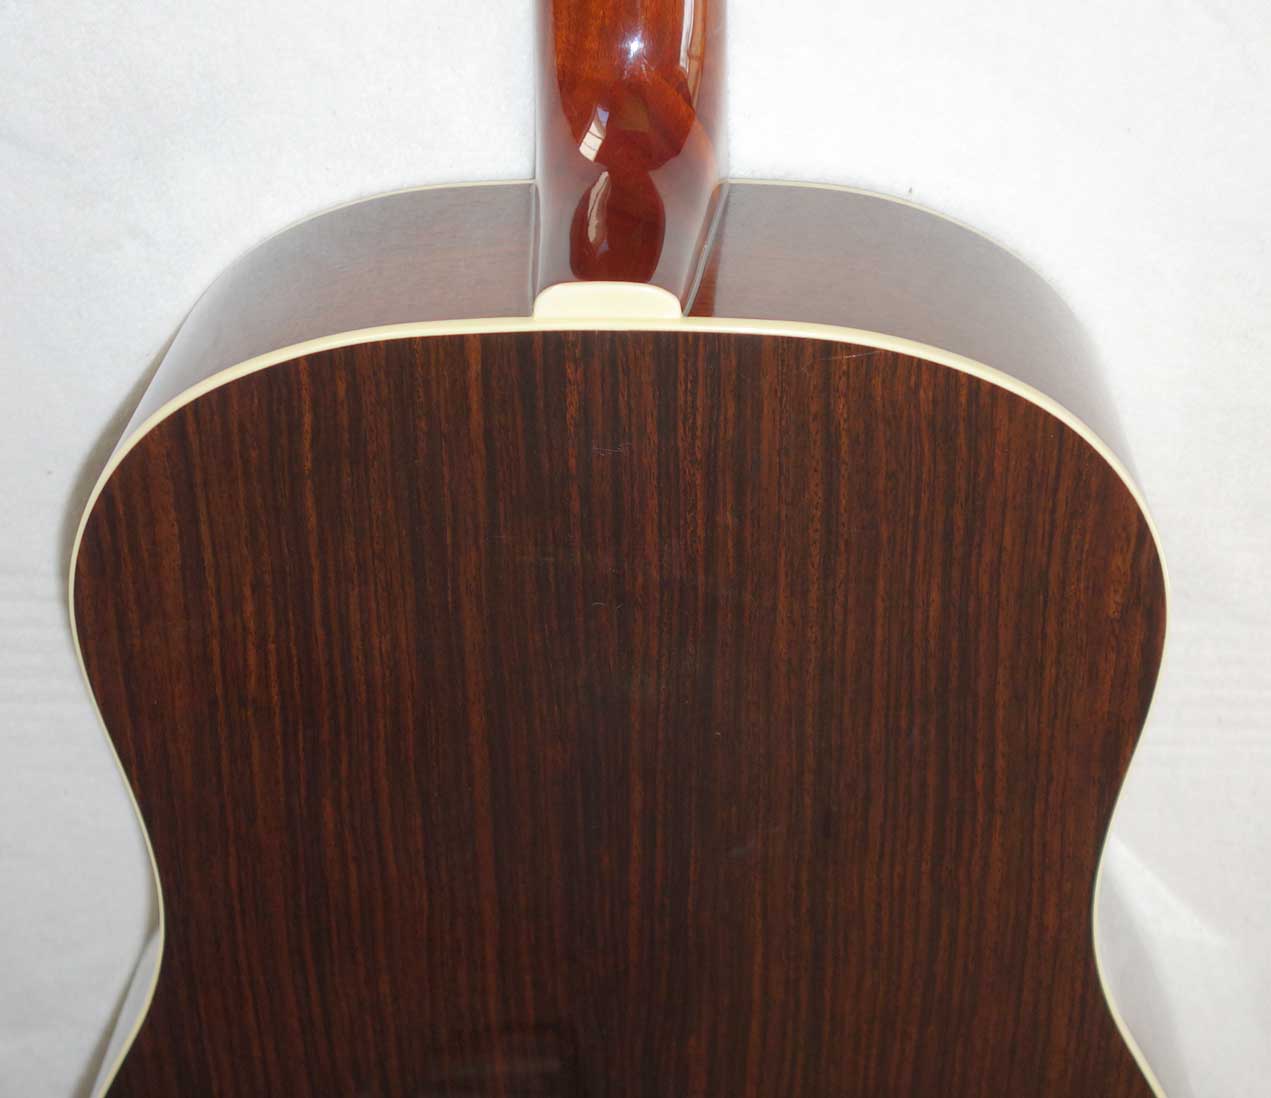 Blueridge BG-160 Sloped-Shoulder Dreadnaught Guitar Sunburst Finish, All-Solid Wood Construction w/Softshell Case